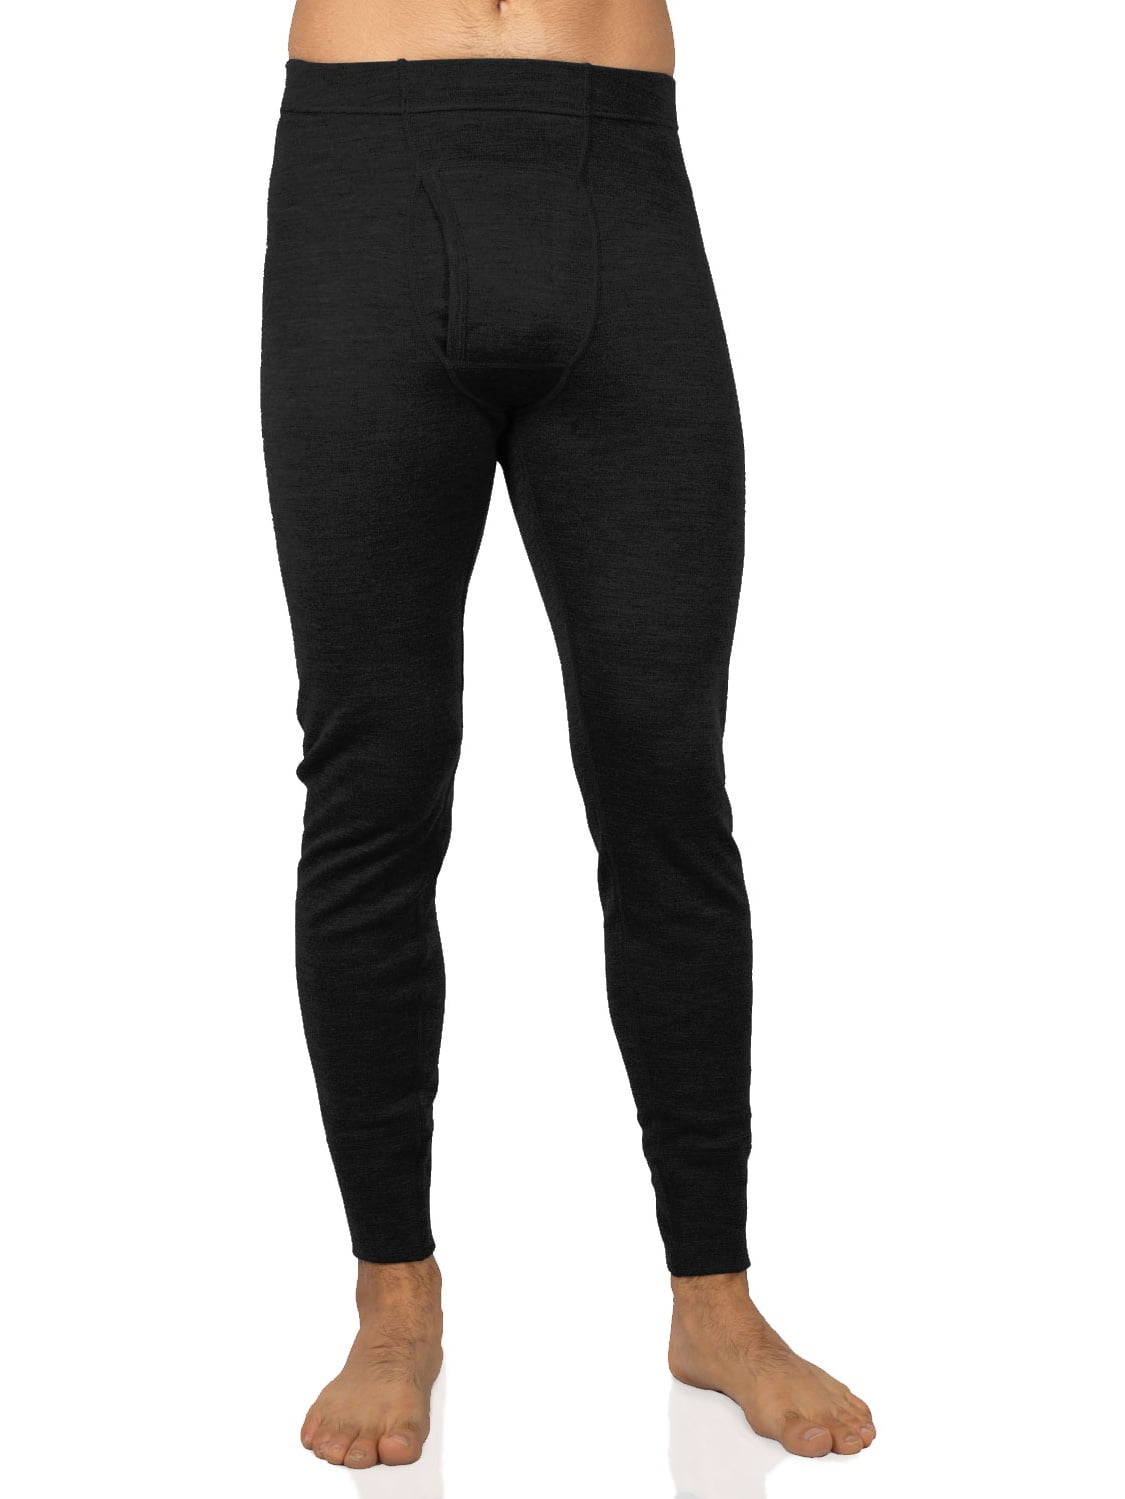 Swift Lightweight Merino Wool Legging - Black  Wool leggings, Perfect  leggings, Under dress